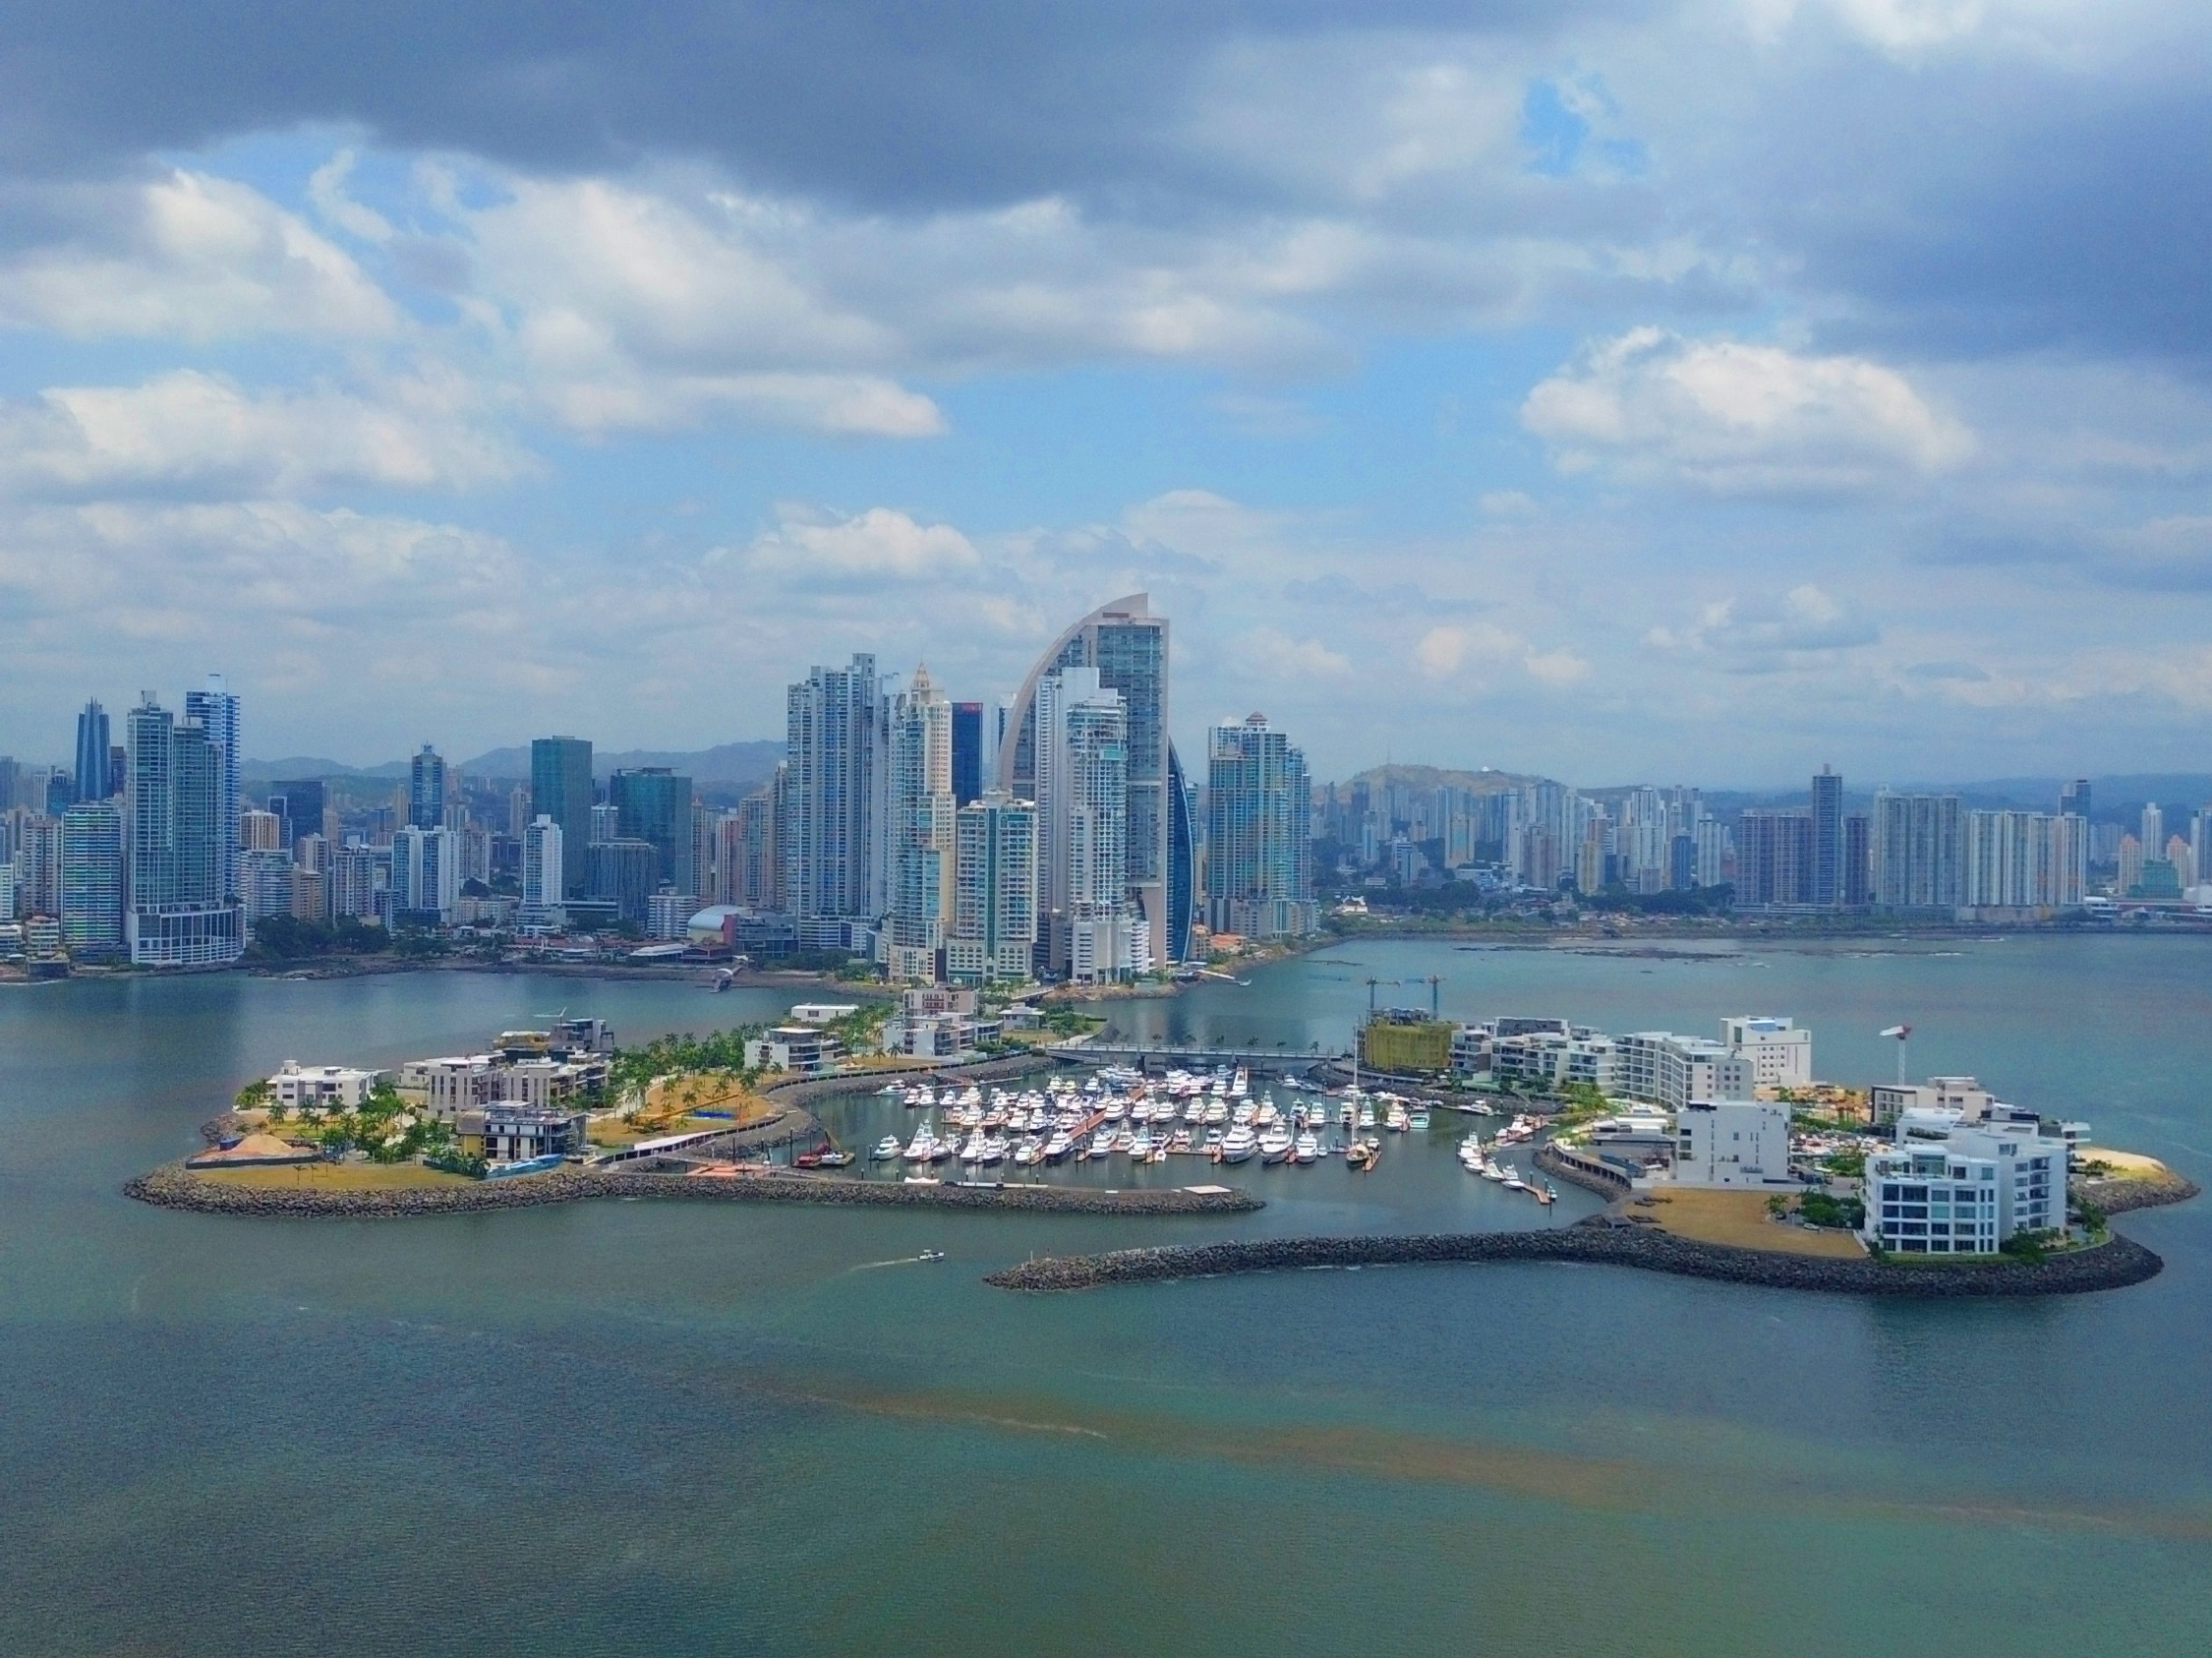 Centros comerciales en Panamá: innovación para inversores de Guatemala